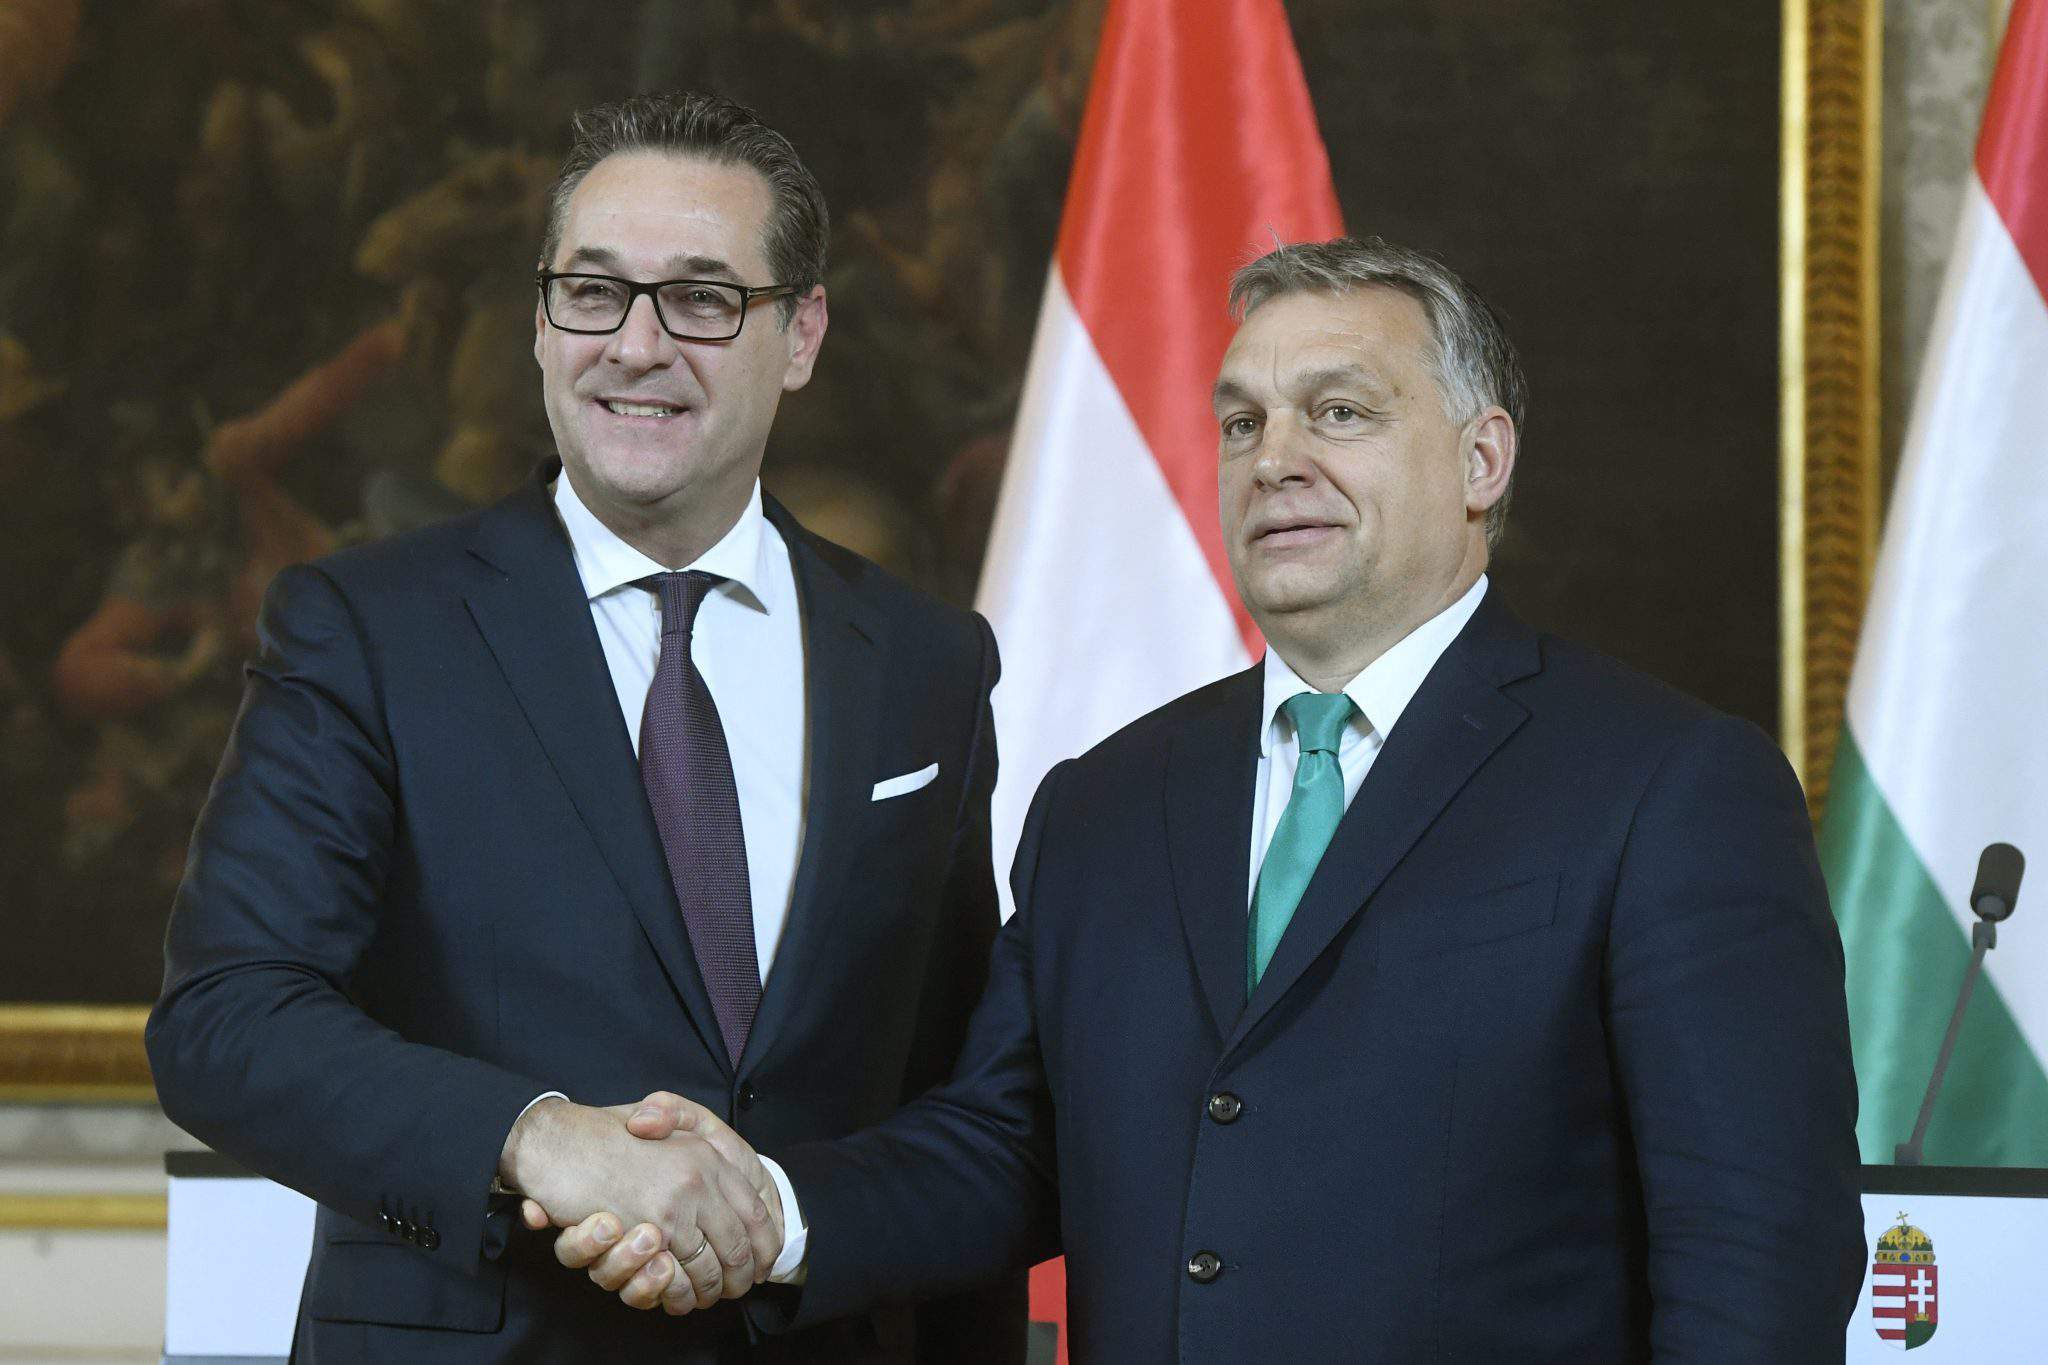 STRACHE, Heinz-Christian; Viktor Orbán